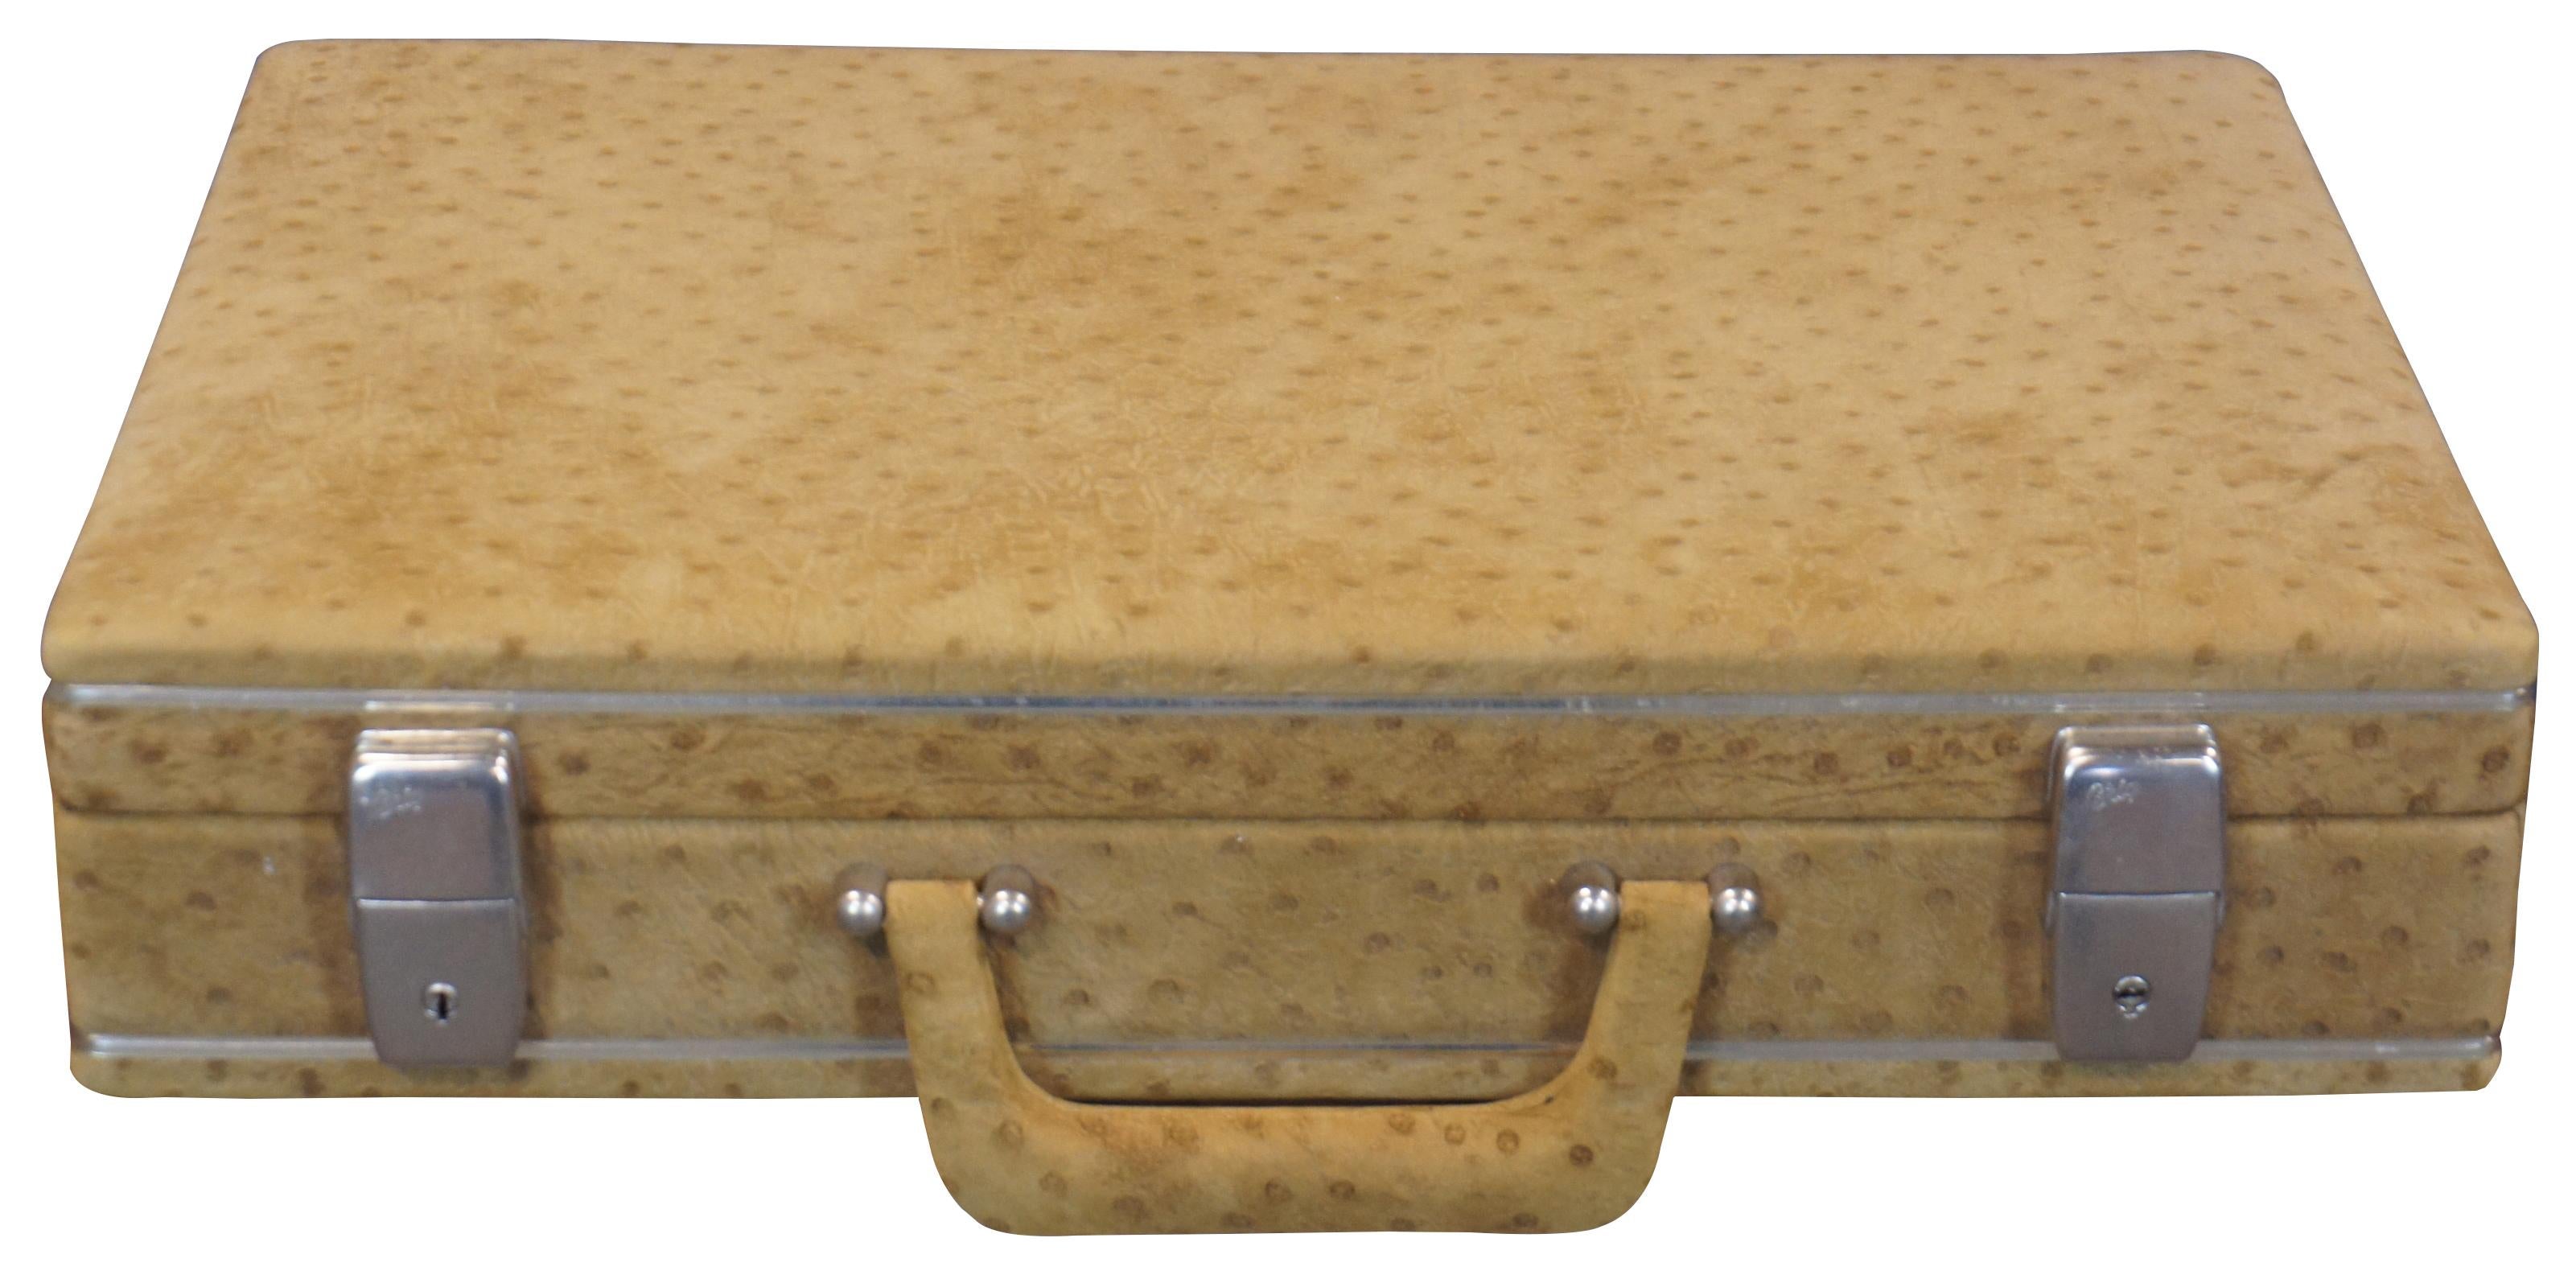 Rare vintage never used Brig Ubrique beige ostrich skin suede leather briefcase; keys included. Made in Spain.
    